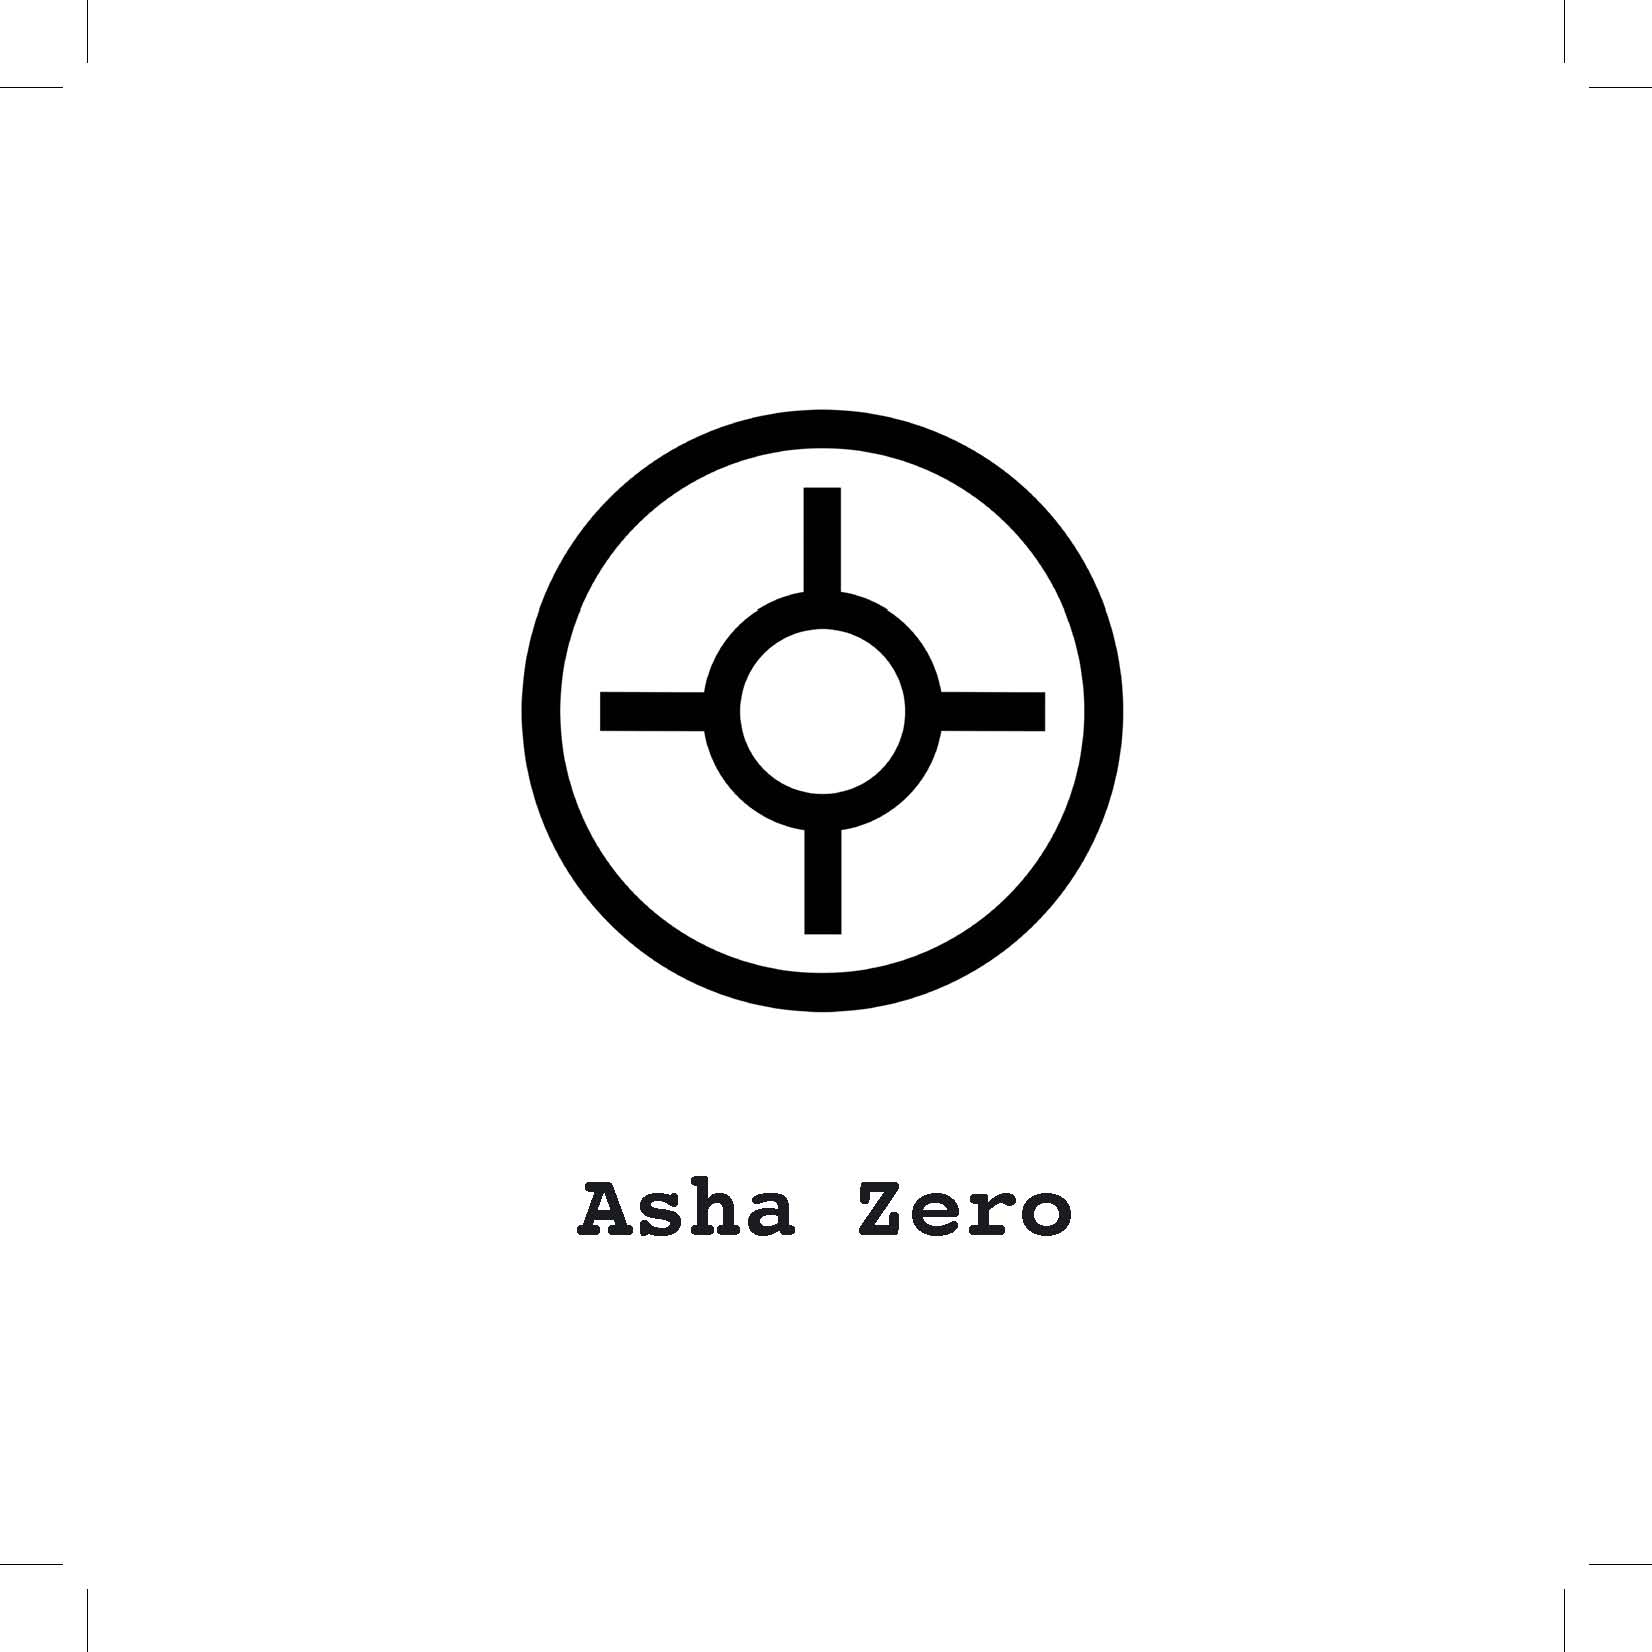 MAP Southafrica - Asha Zero 2006 0